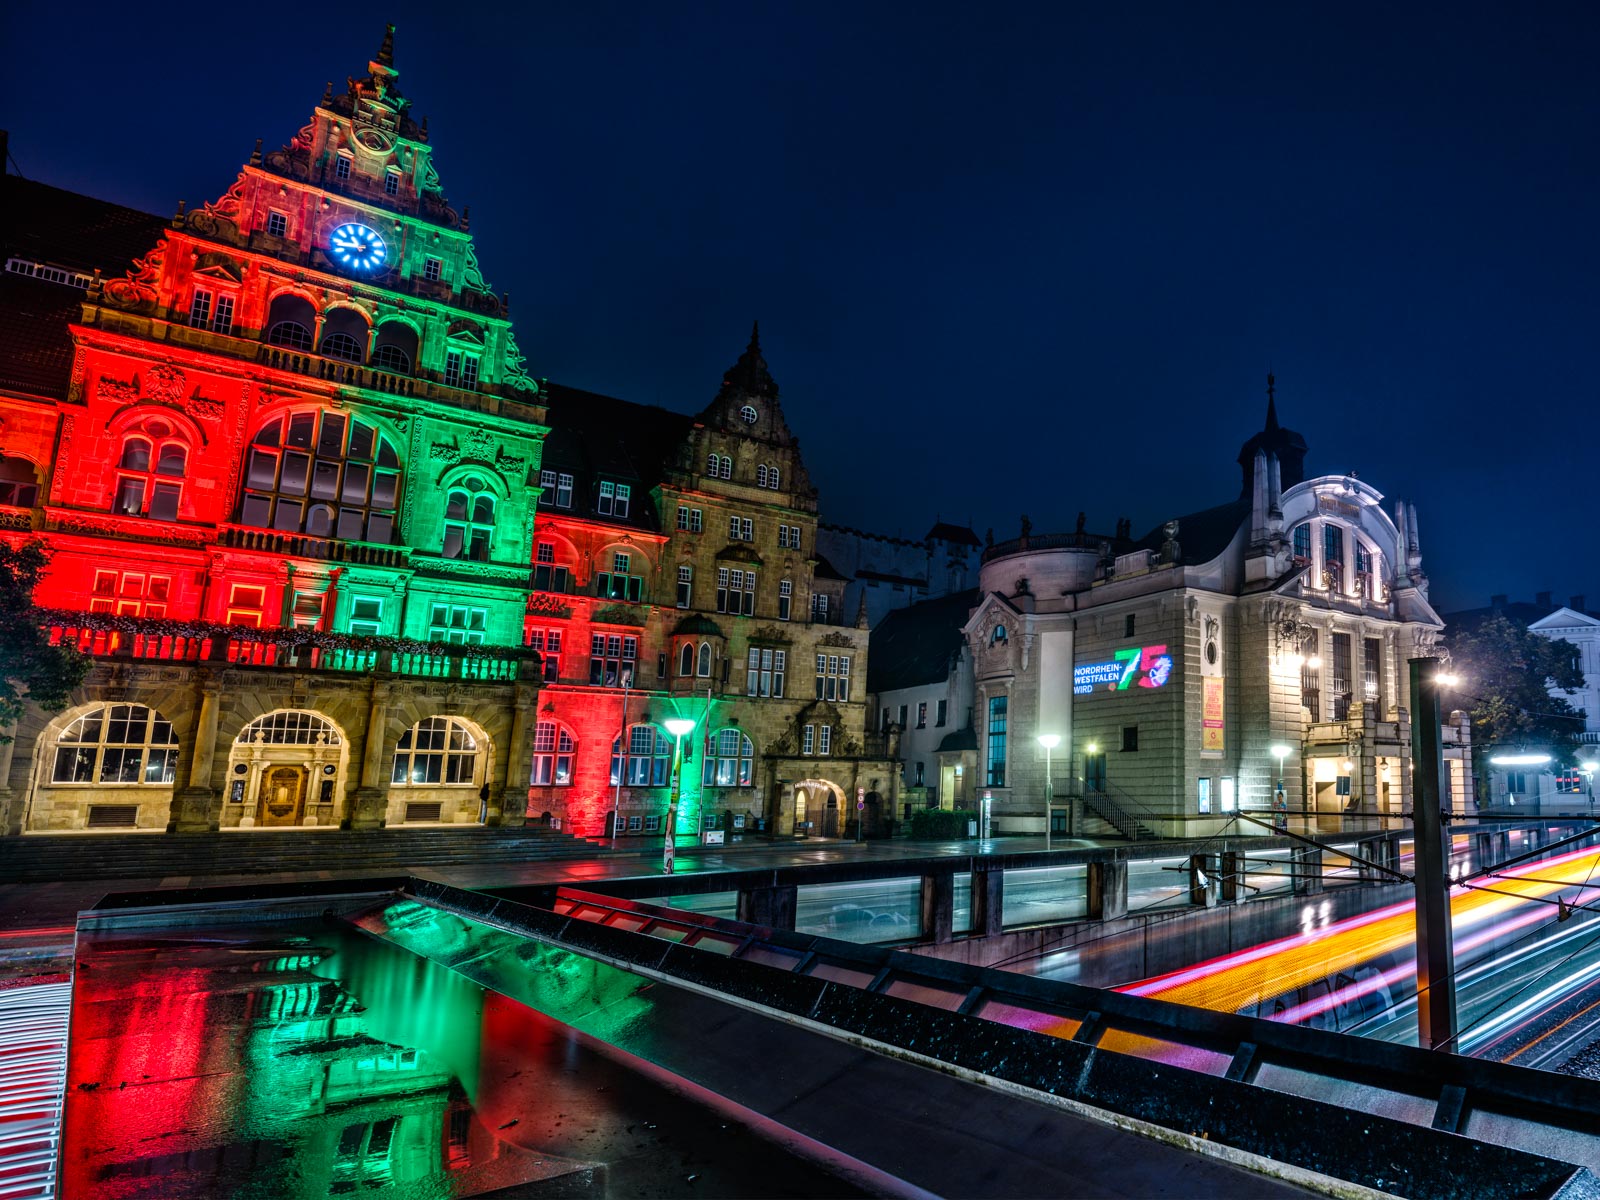 75 years of NRW - Bielefeld City Hall on August 28, 2021 (Bielefeld, Germany).